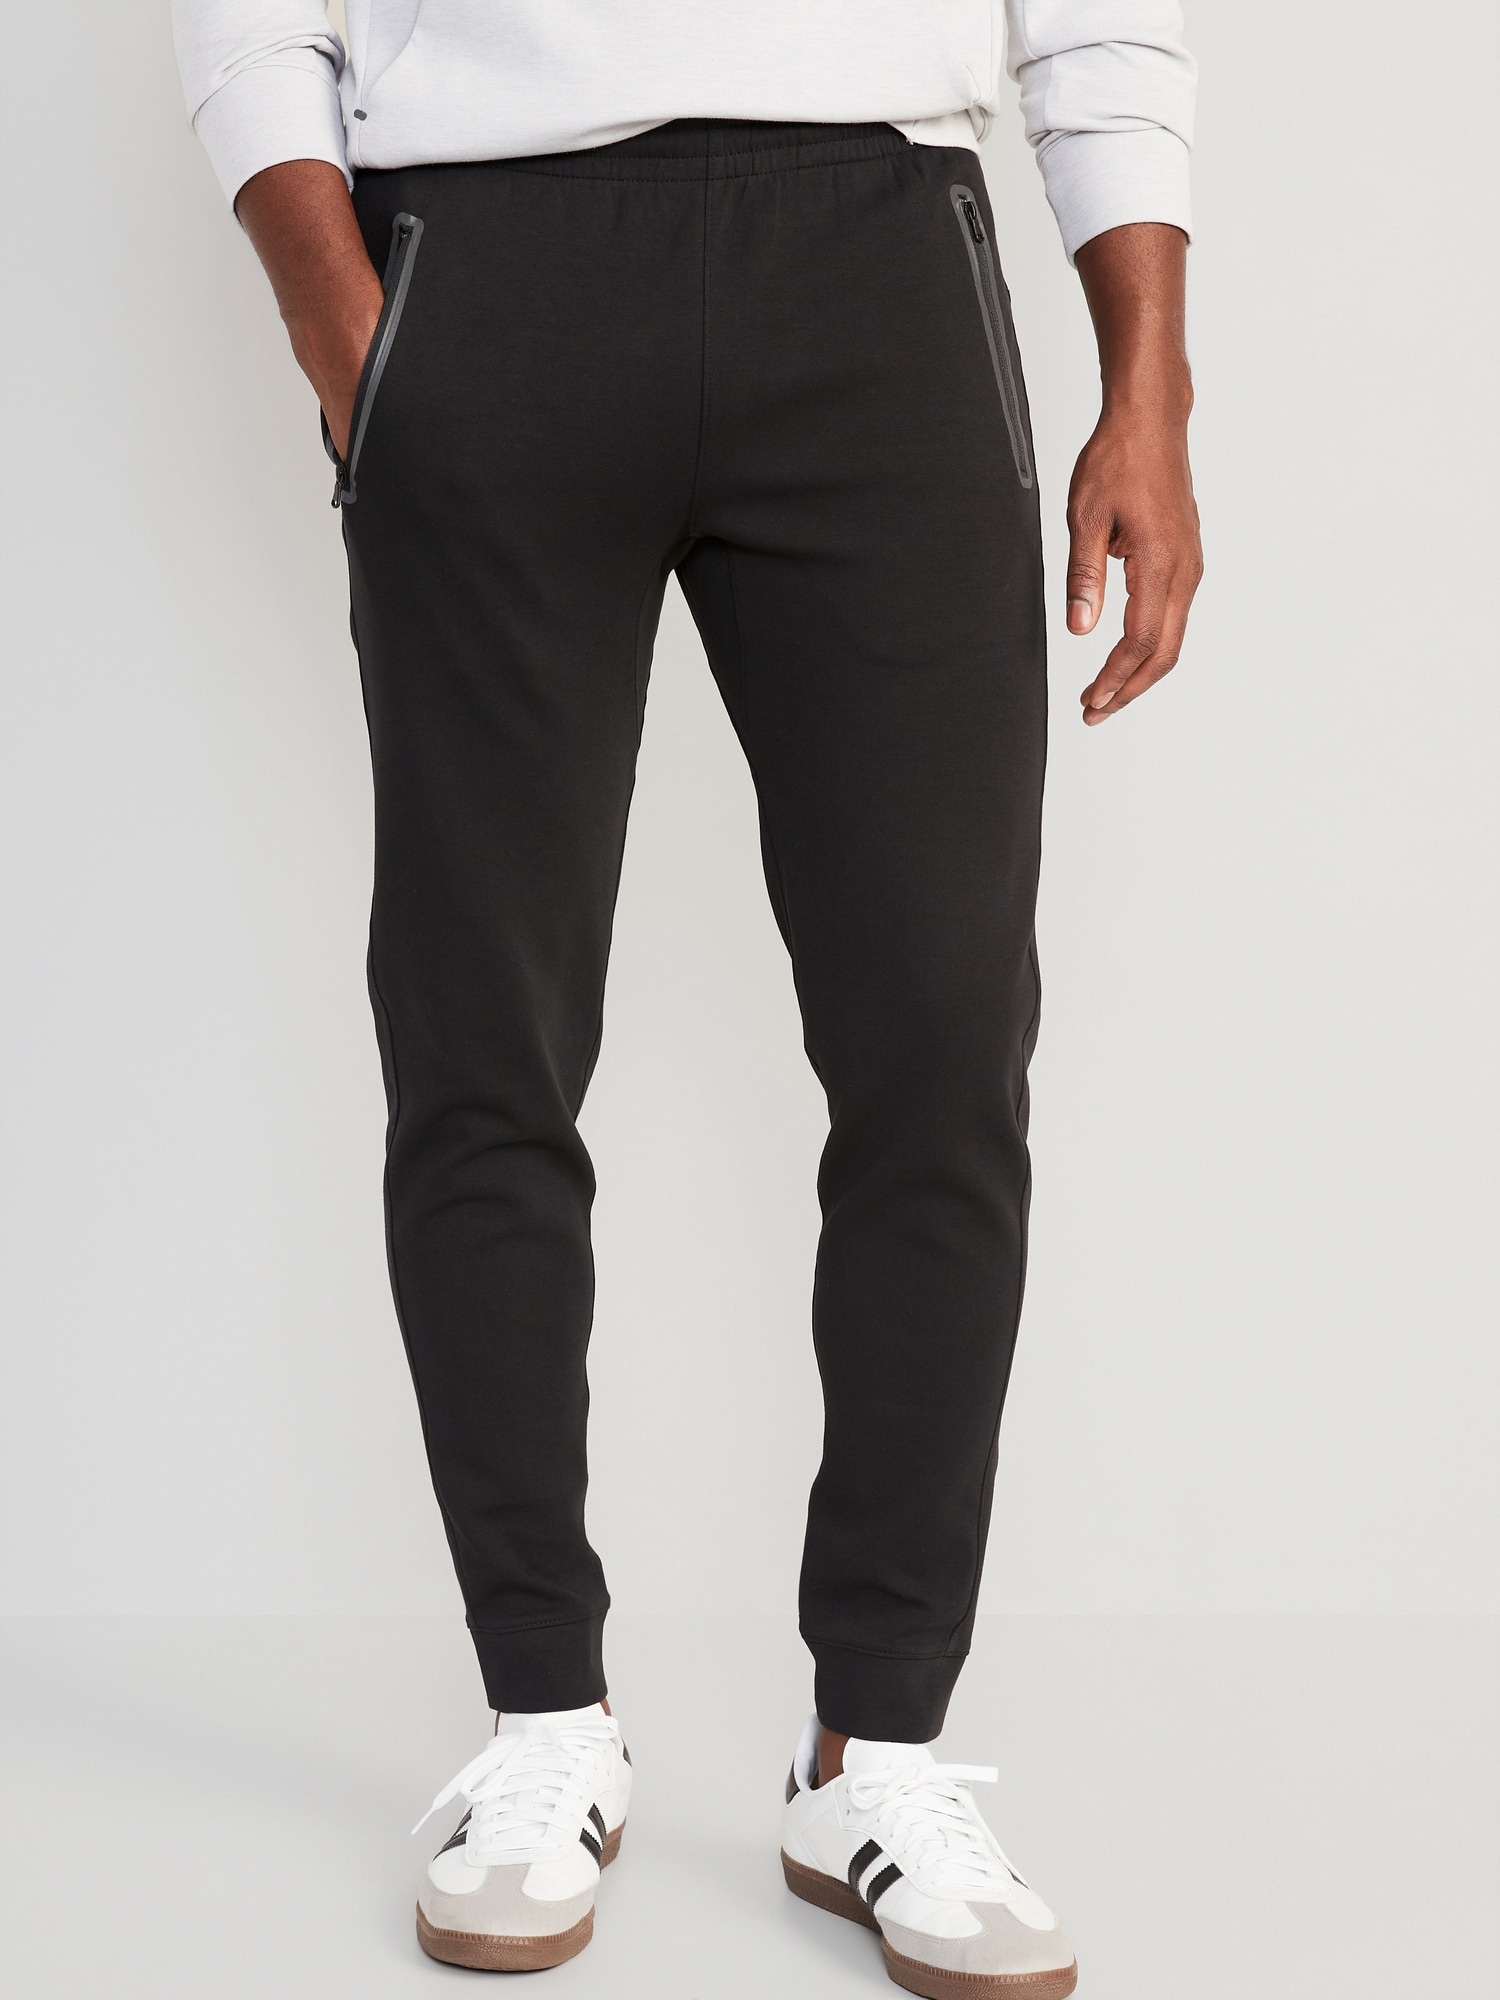 Men's sweatpants - active fleece joggers. 100 % great quality